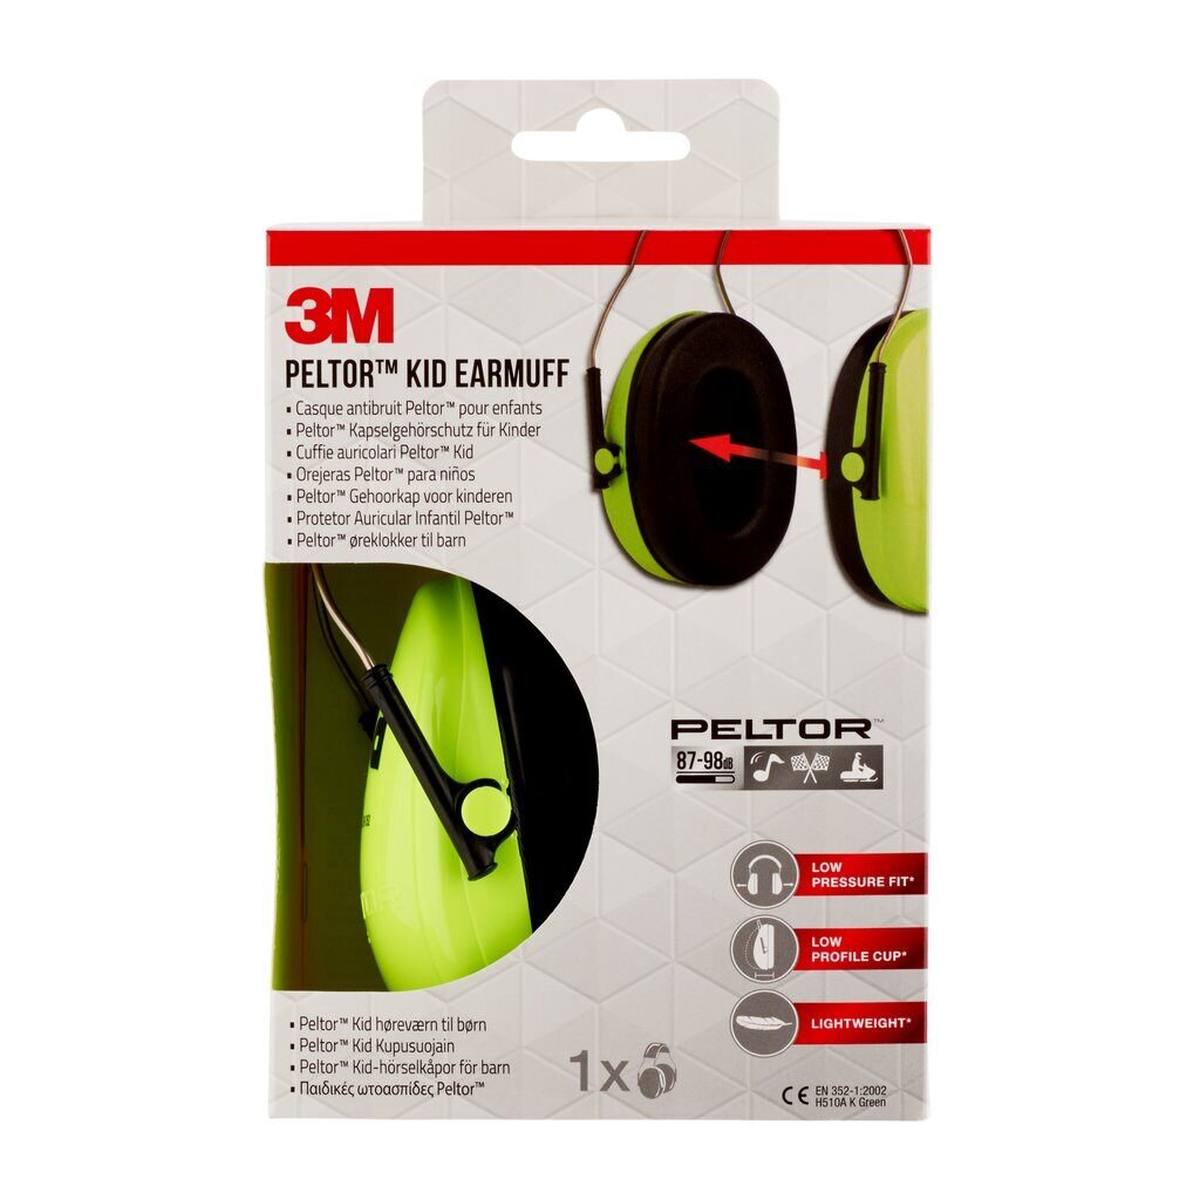 3M PELTOR Earmuffs for children H510AK, neon green (87 to 98 dB)